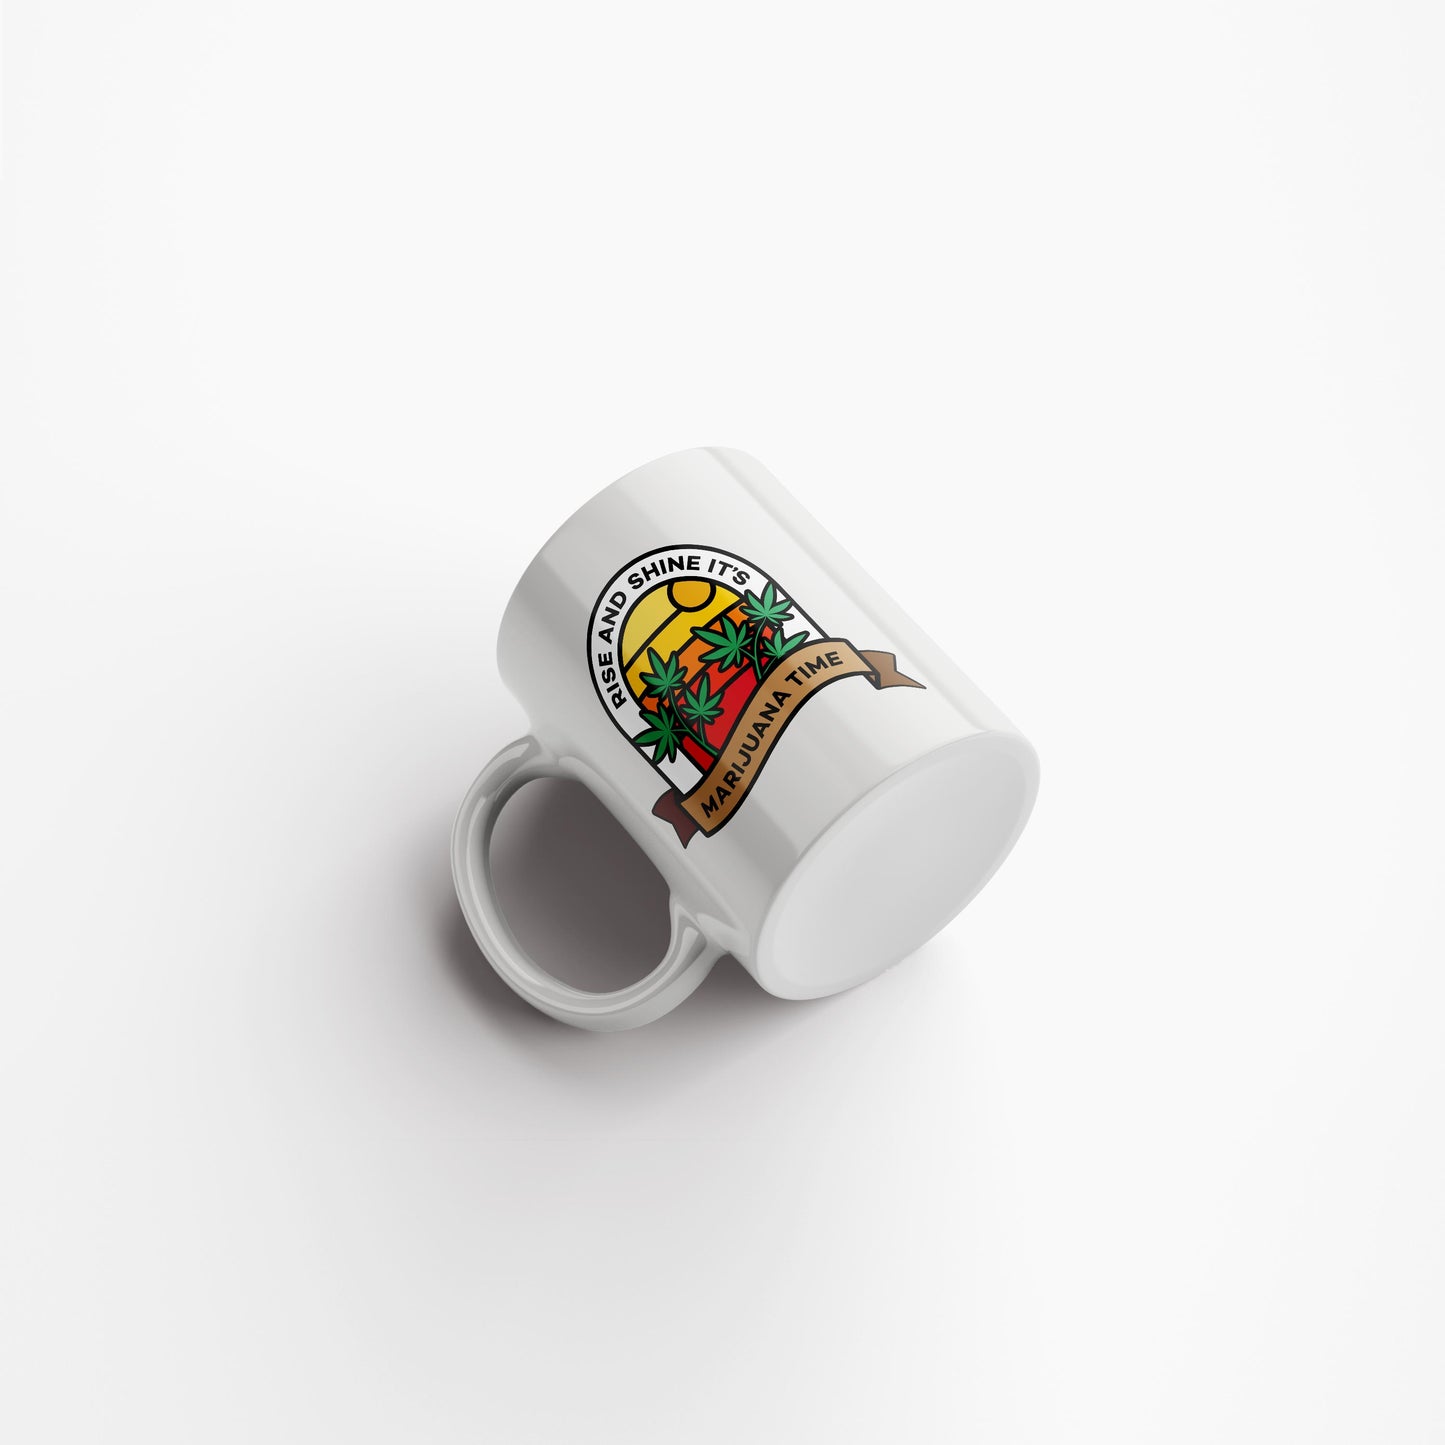 rise and shine its marijuana time - cannabis themed mug by fntsma